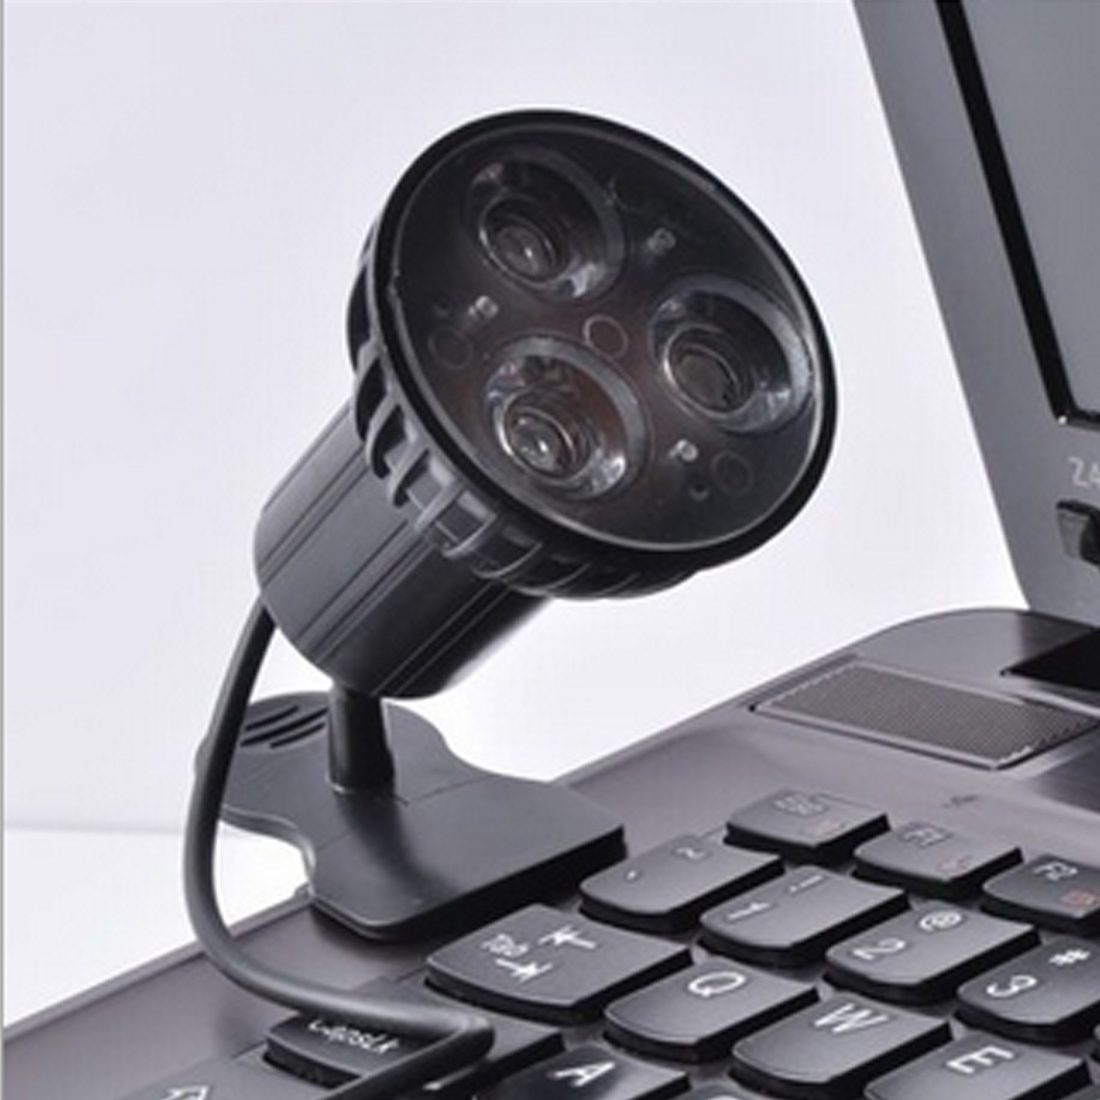 centechia New 1pcs Super Bright 3 LED Port Clip On Spot USB Light Lamp For Laptop PC Notebook Black